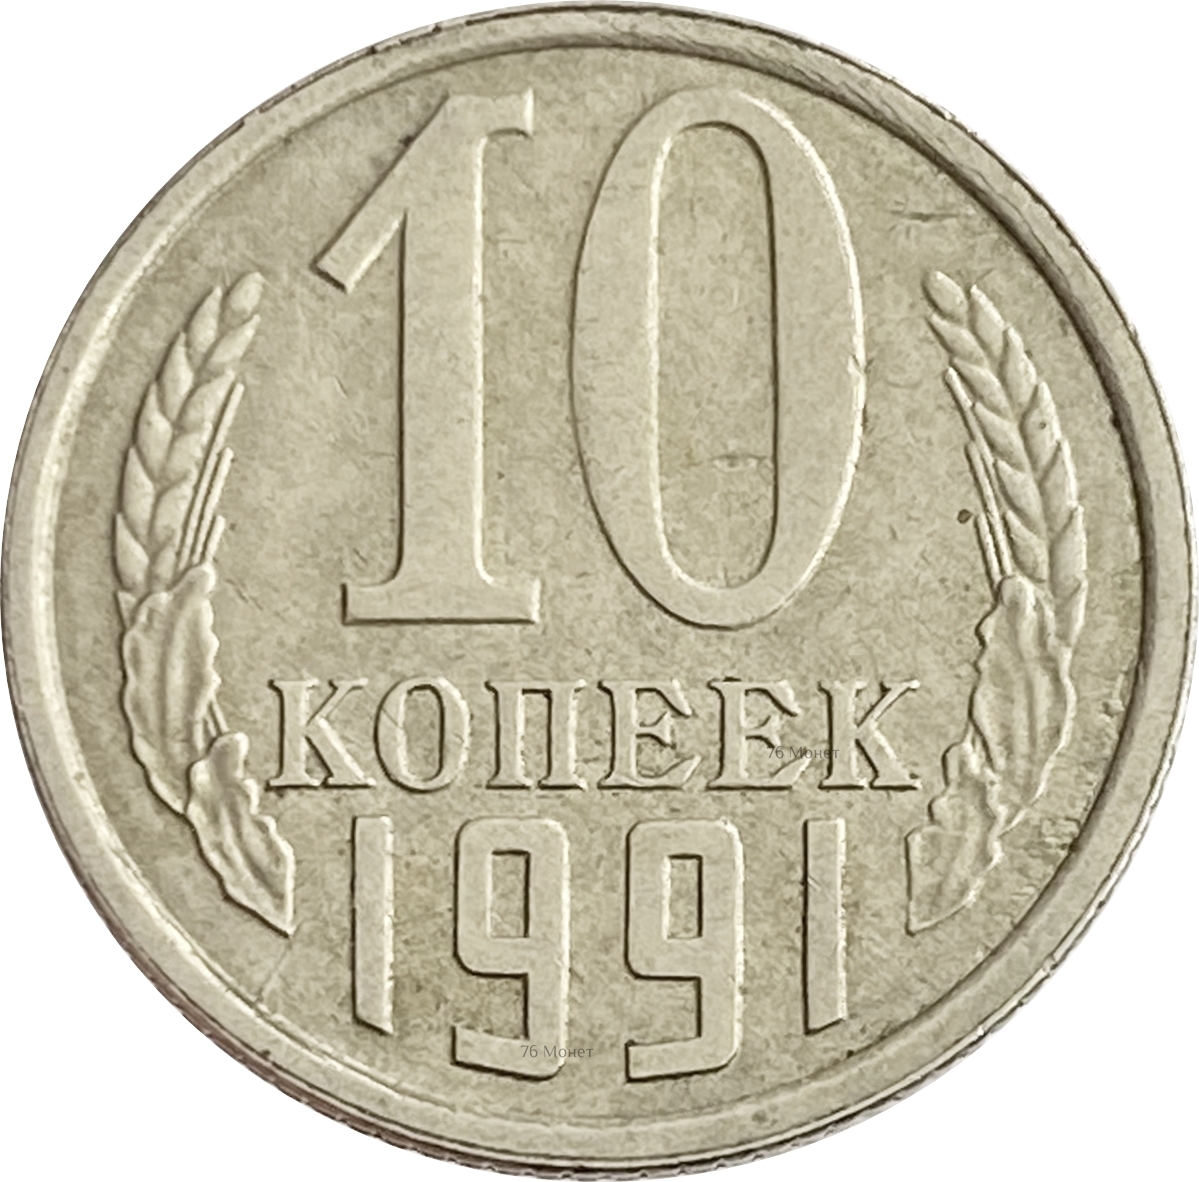 Монета 10 копеек 1991 года. 15 Копеек 1991. 10 Копеек Грузия. Монеты России фон.